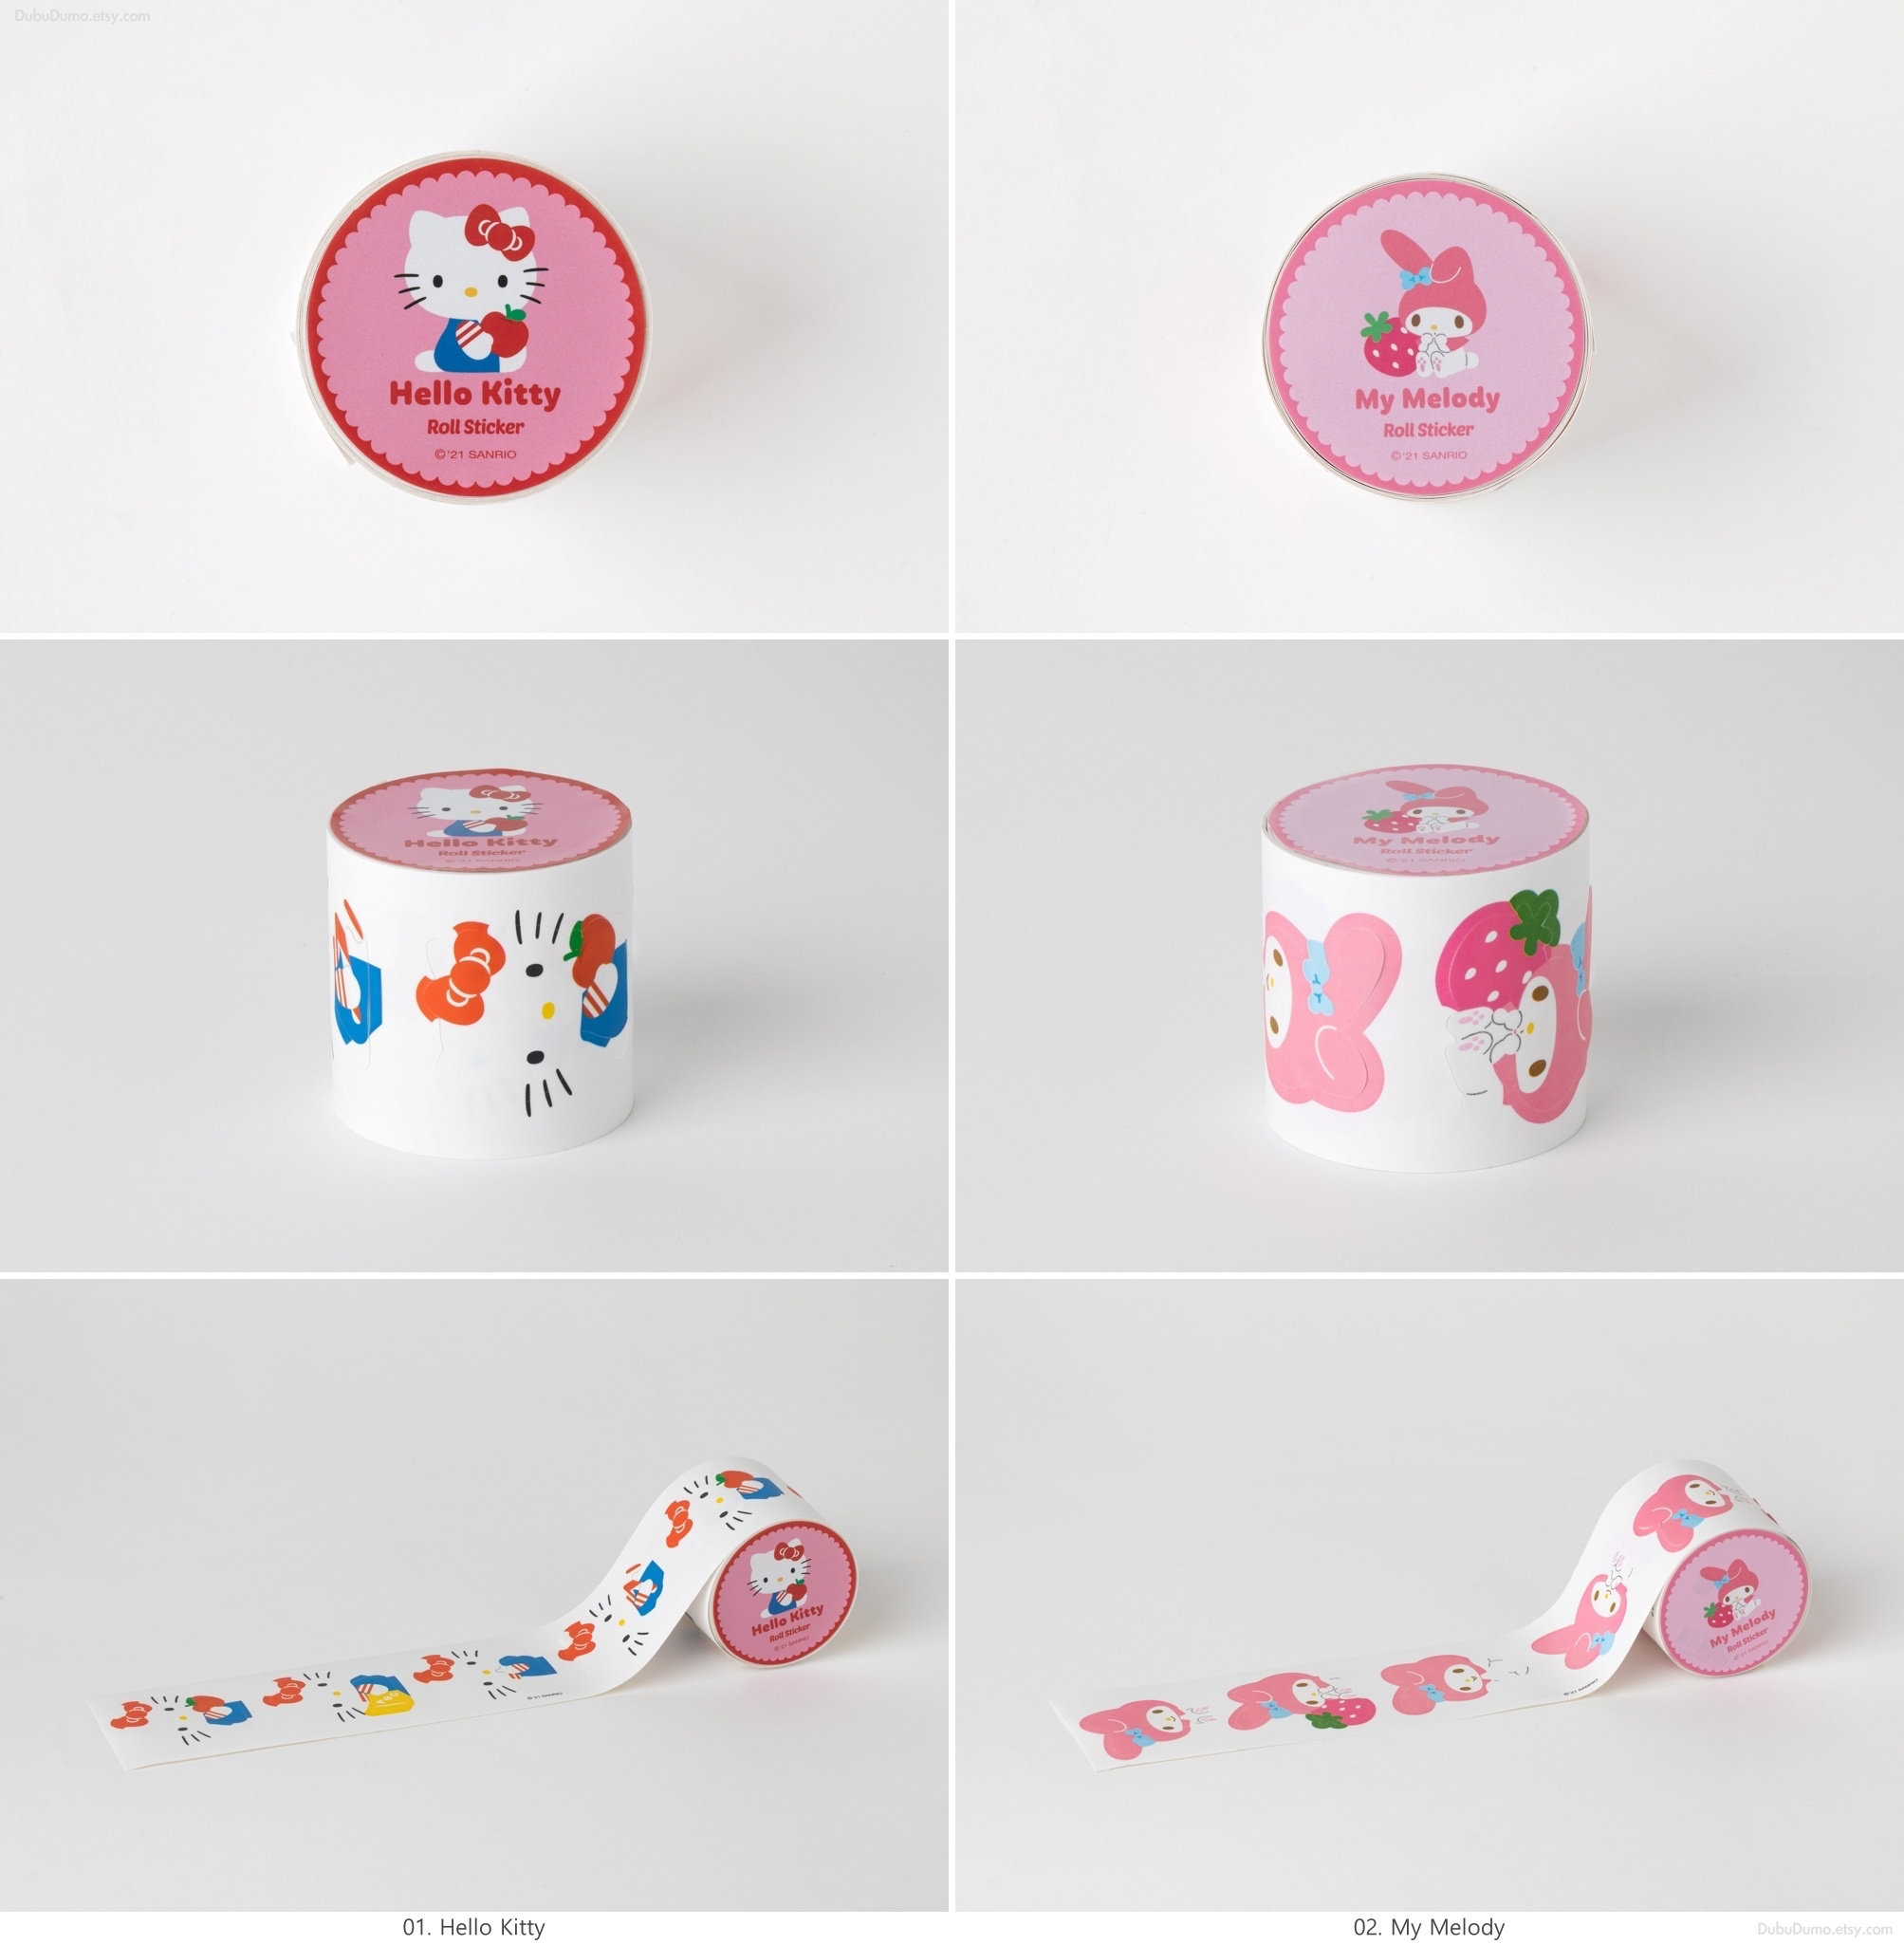 Sanrio Decorative Masking Tape Stickers for Journal Craft - Good Times –  KawaiiGoodiesDirect